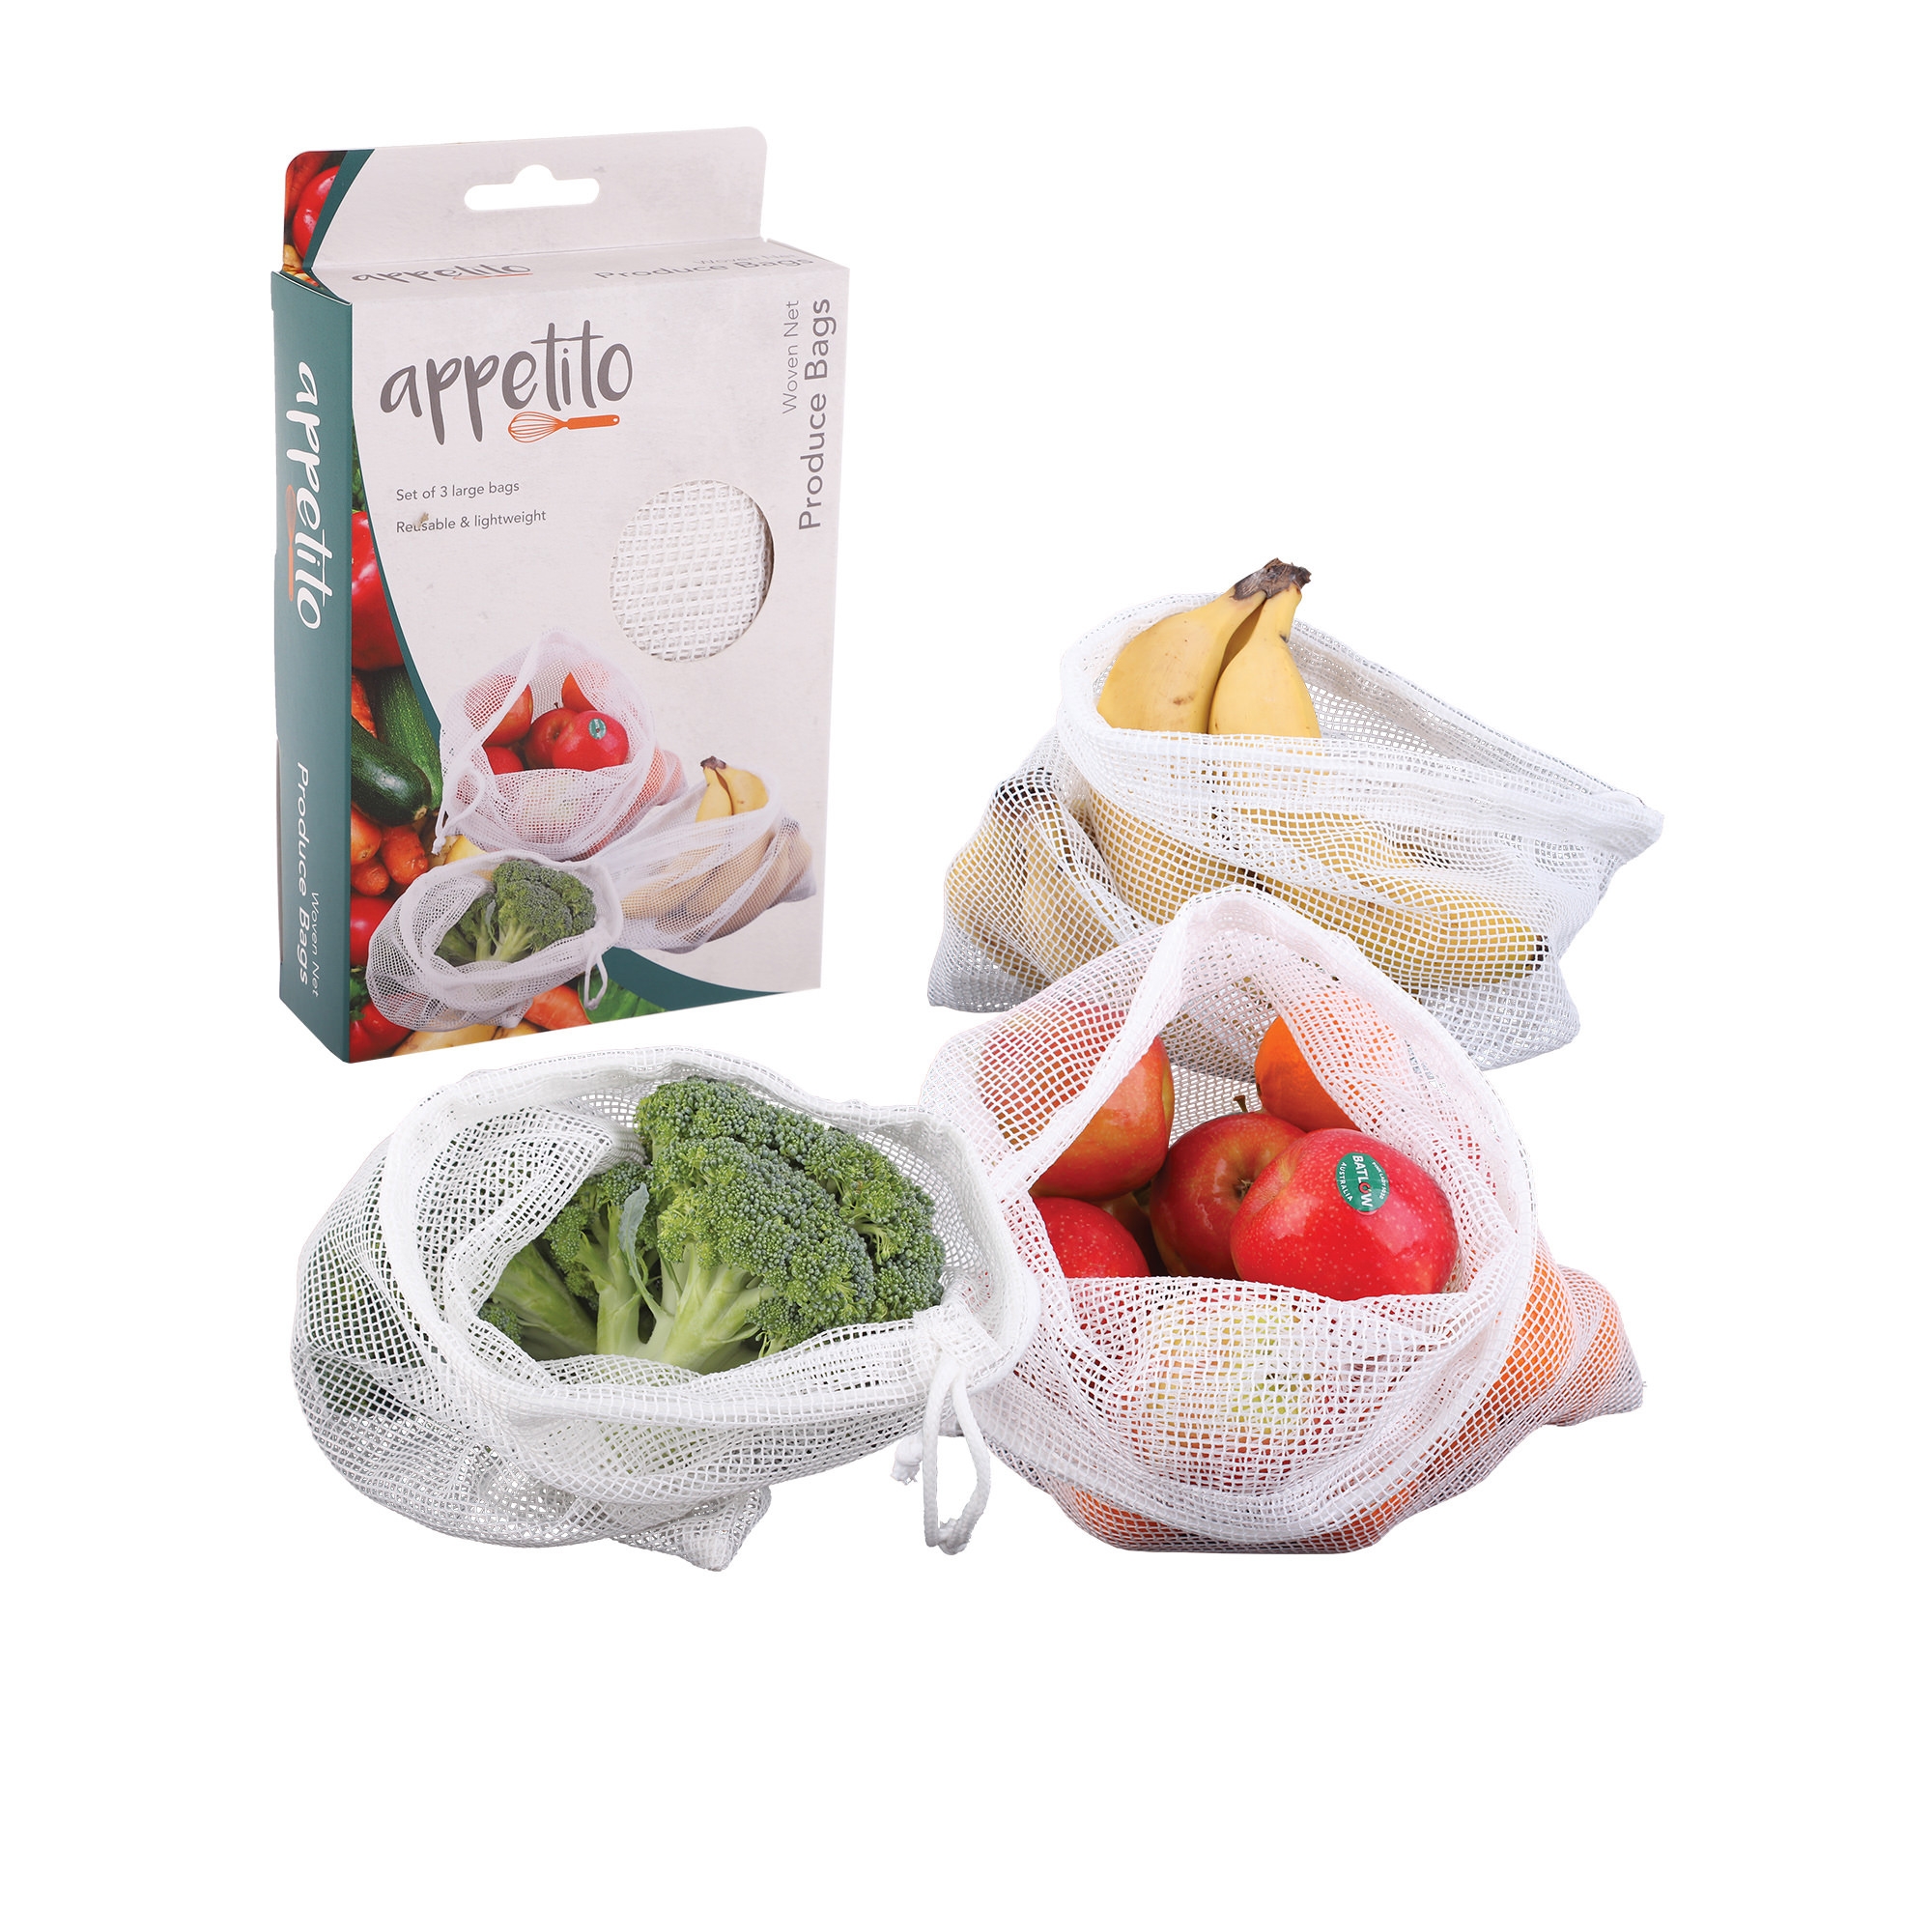 Appetito Woven Net Produce Bag Set of 3 Image 1